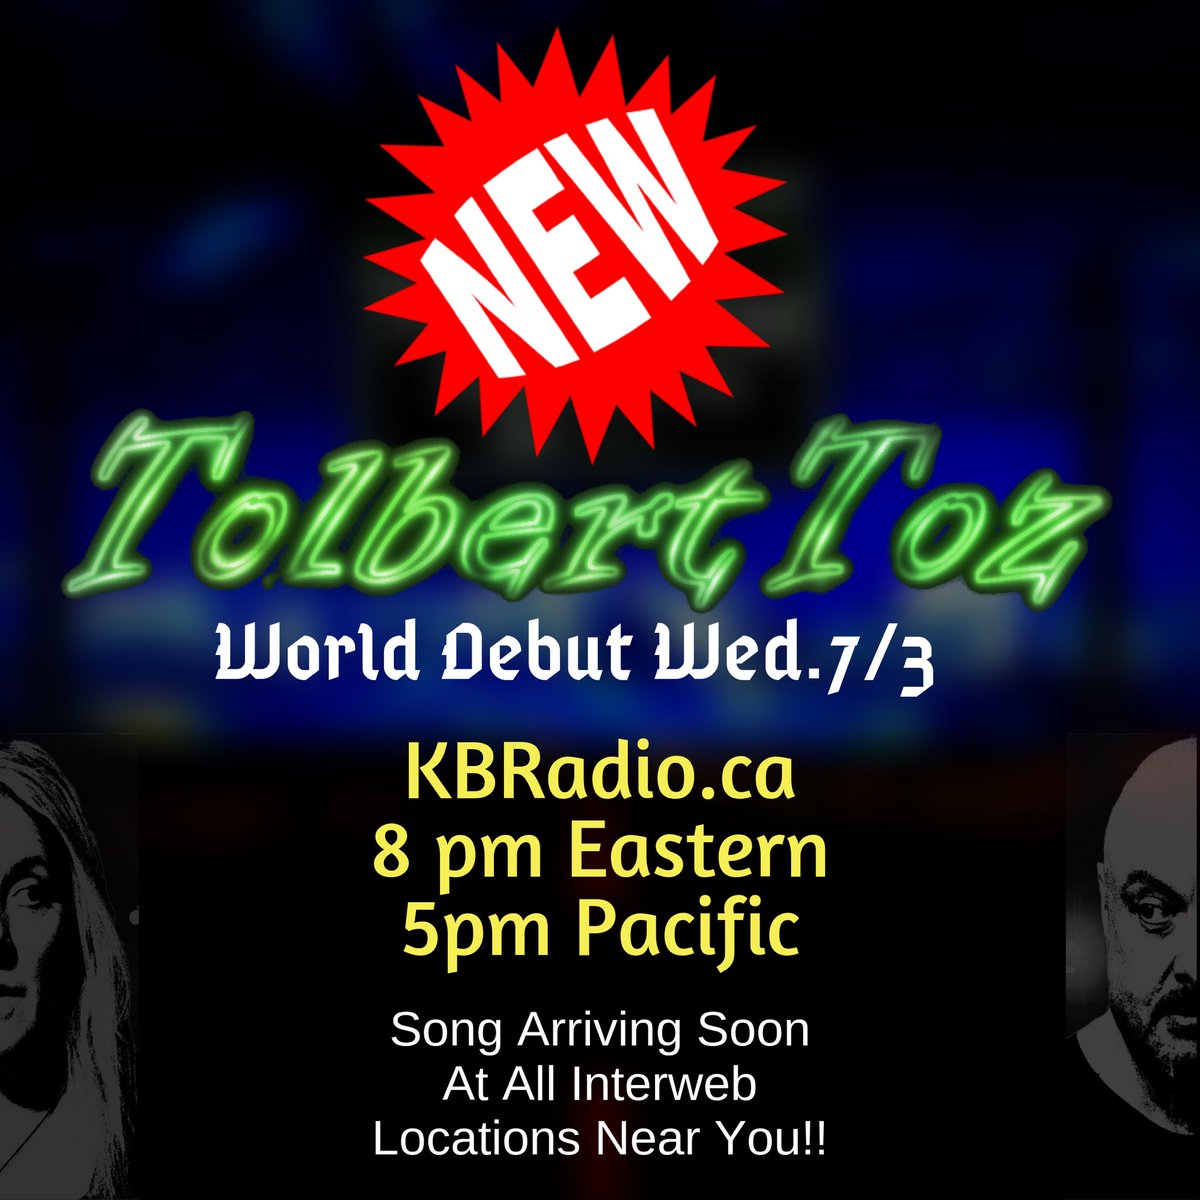 @KBRadio_Canada @TolbertToz @RedroadFM @LonelyOakRadio @joyrock1212 Right on...Thanks Al!!
We appreciate it.

What Al Said...
#WorldDebut Wed. 7/3 
#IndieShow starts at 8. 🕗
Don’t be Late (ET)
👉 KBRadio.ca

🔎👀@TolbertToz 🔛🌏↔️🕸

🌏☮️
@SusanBrodie_221 @dorner_martina 
@pro_merch 

#museboost